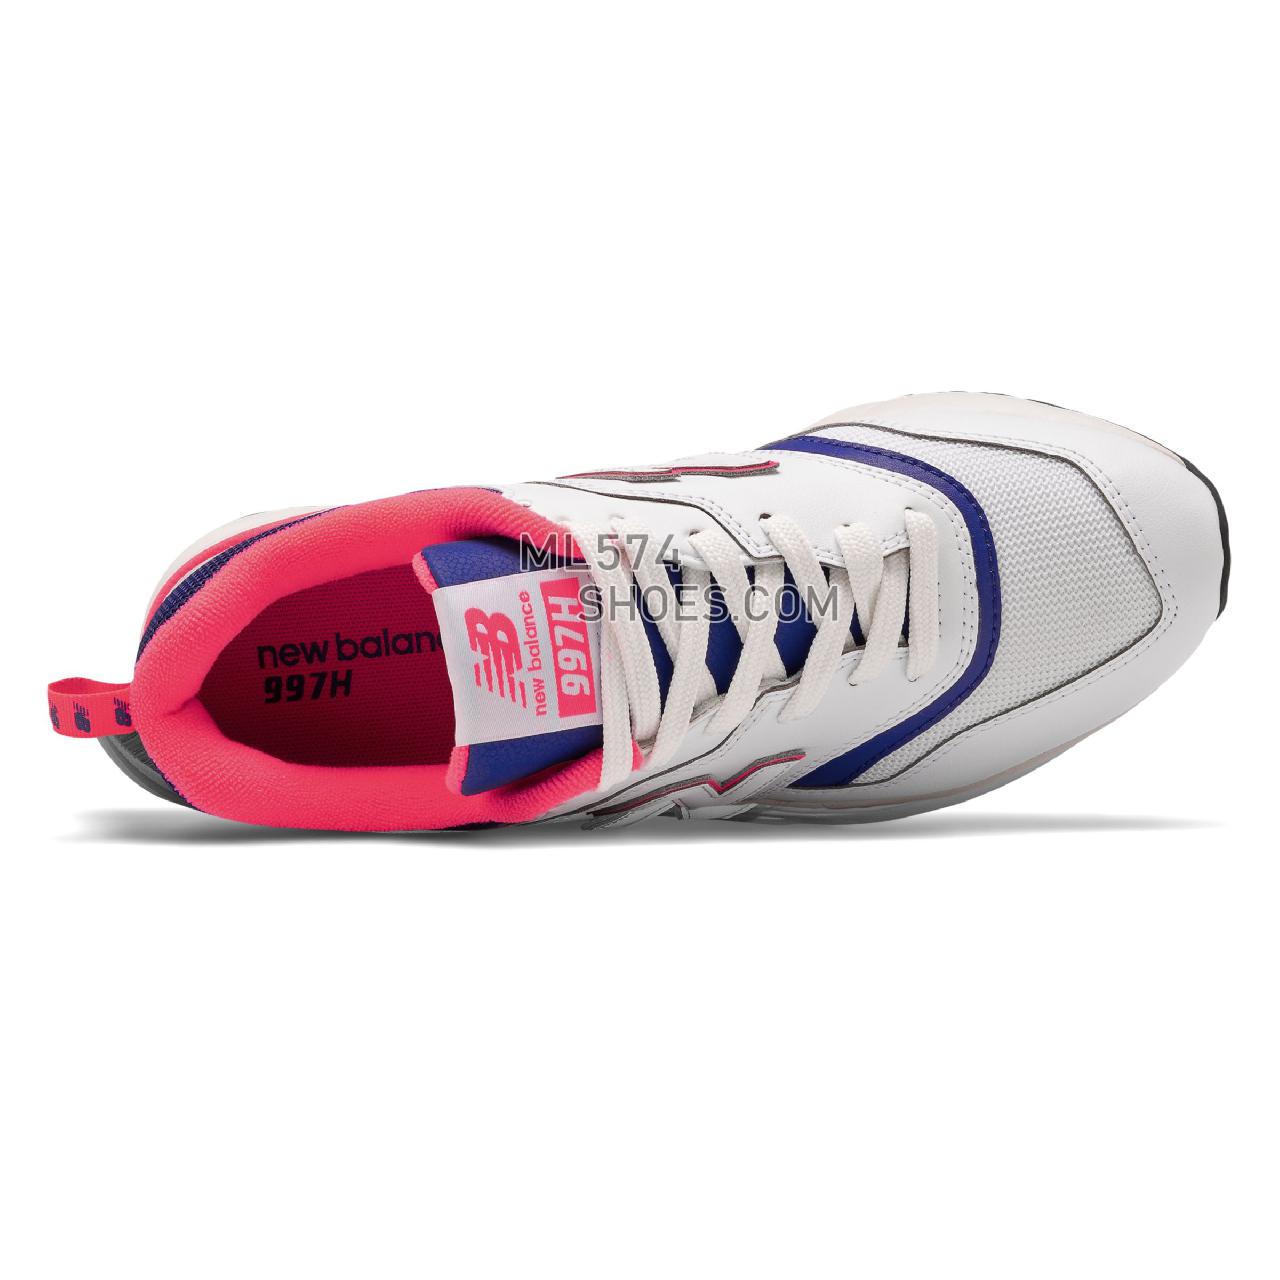 New Balance 997H - Women's Classic Sneakers - White with Team Royal - CW997HAJ